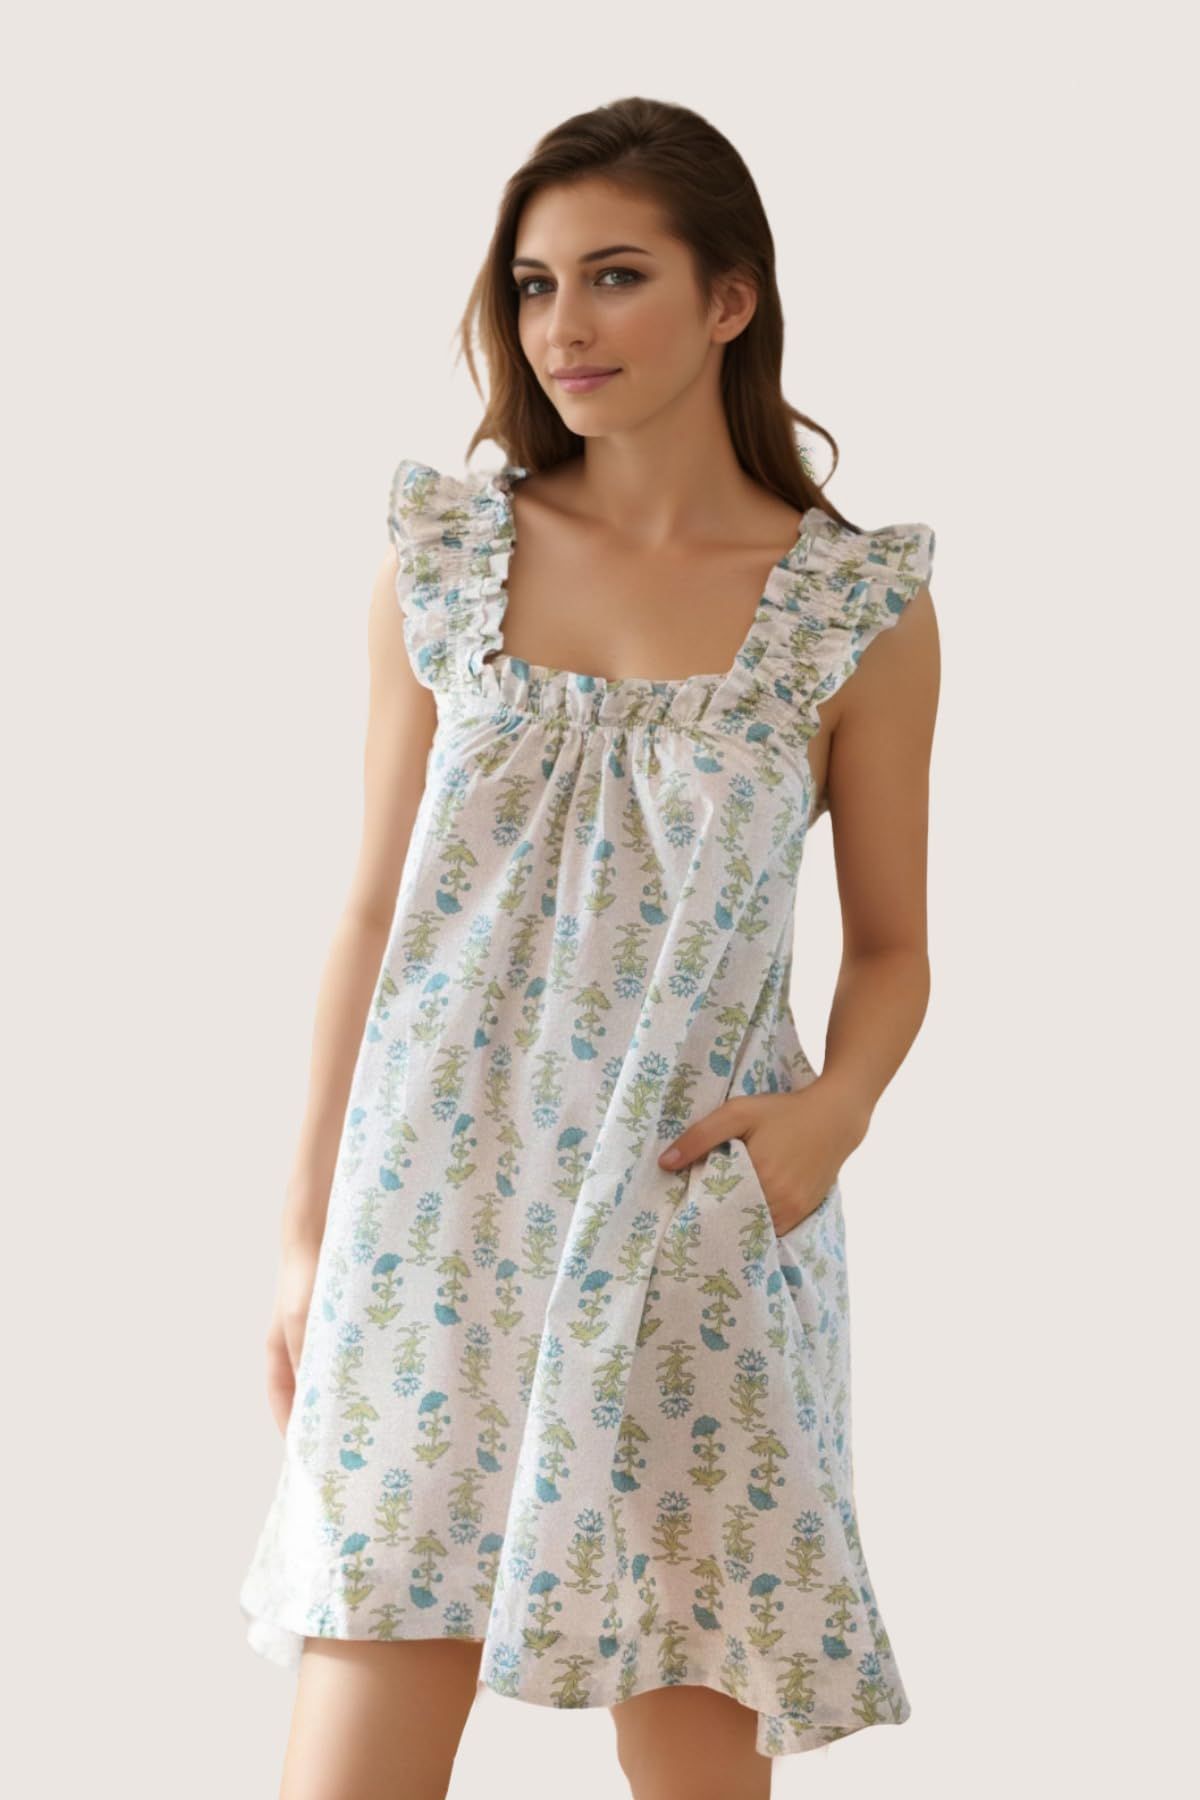 Xfileen Womens Ruffle Sleeveless Nightgowns Soft Cute Printed Sleep Dress Comfy Lightweight Sleepwear | Amazon (US)